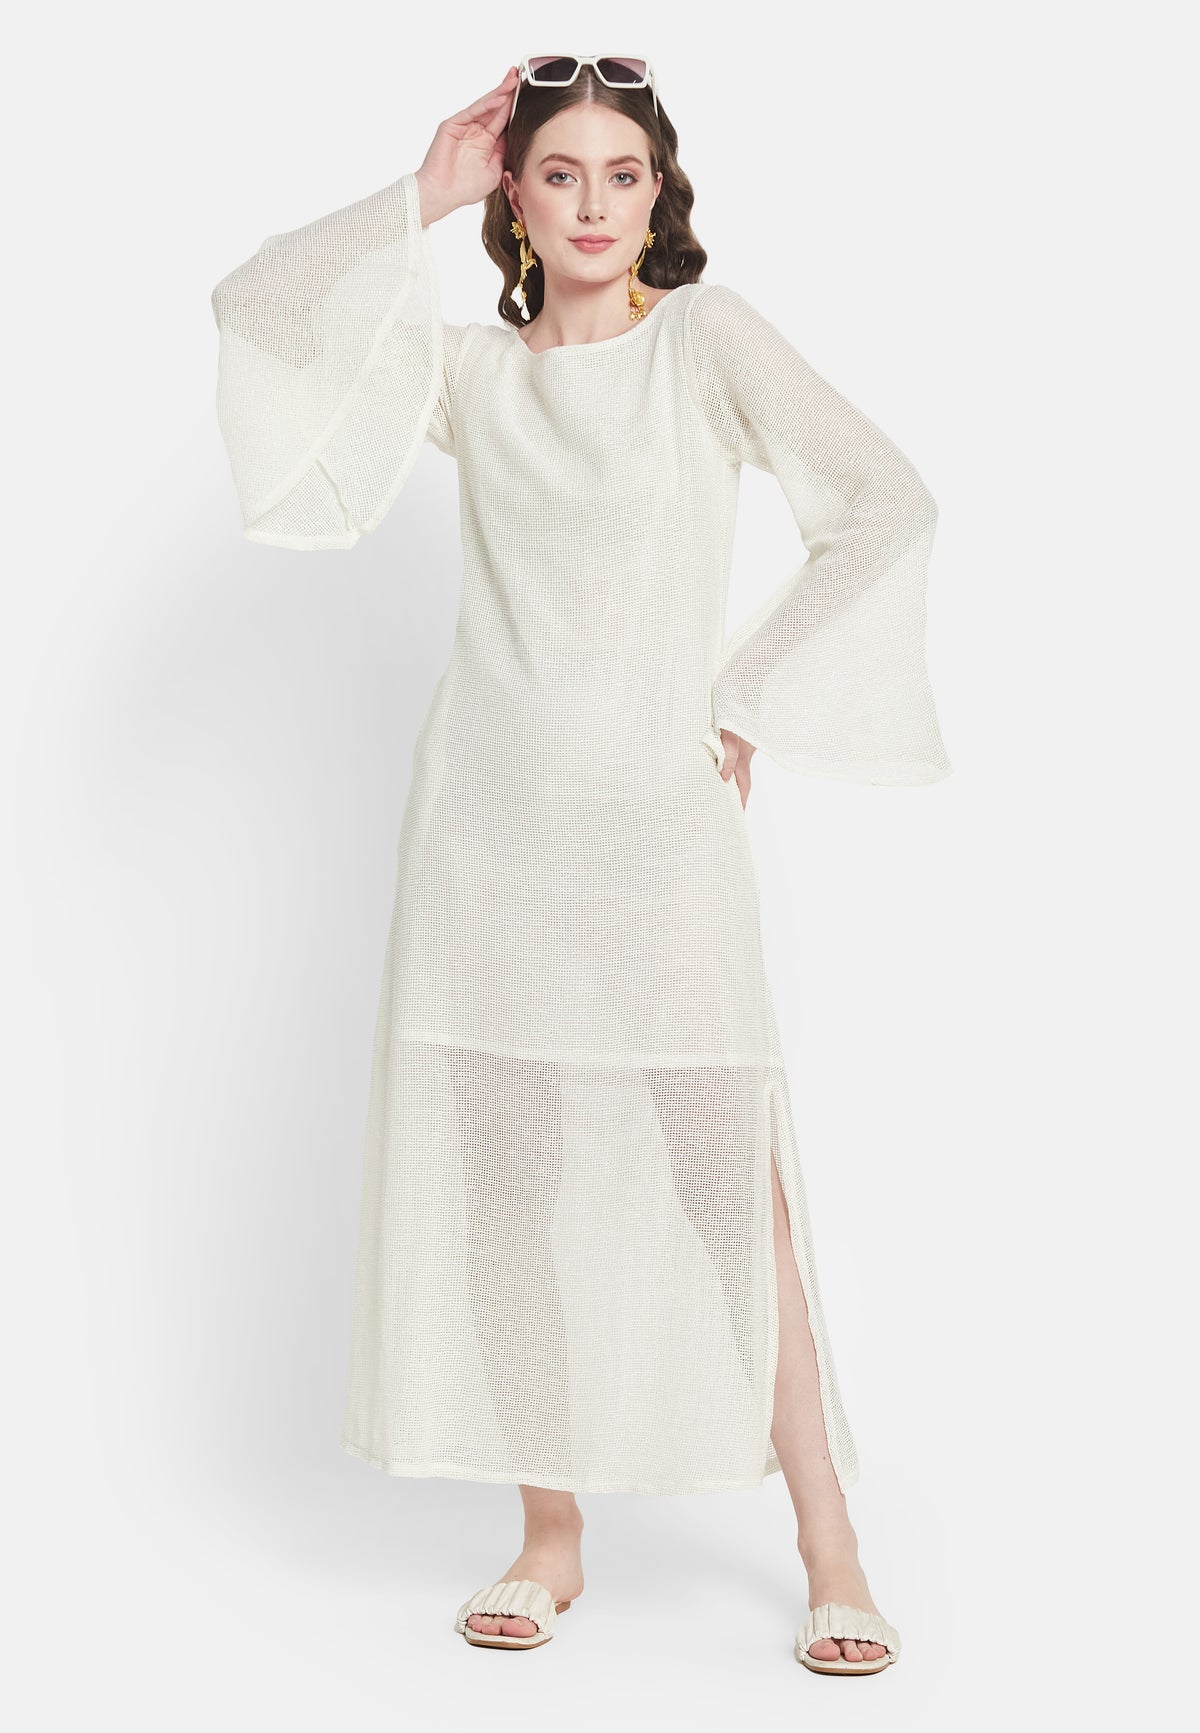 Cassia White Dress